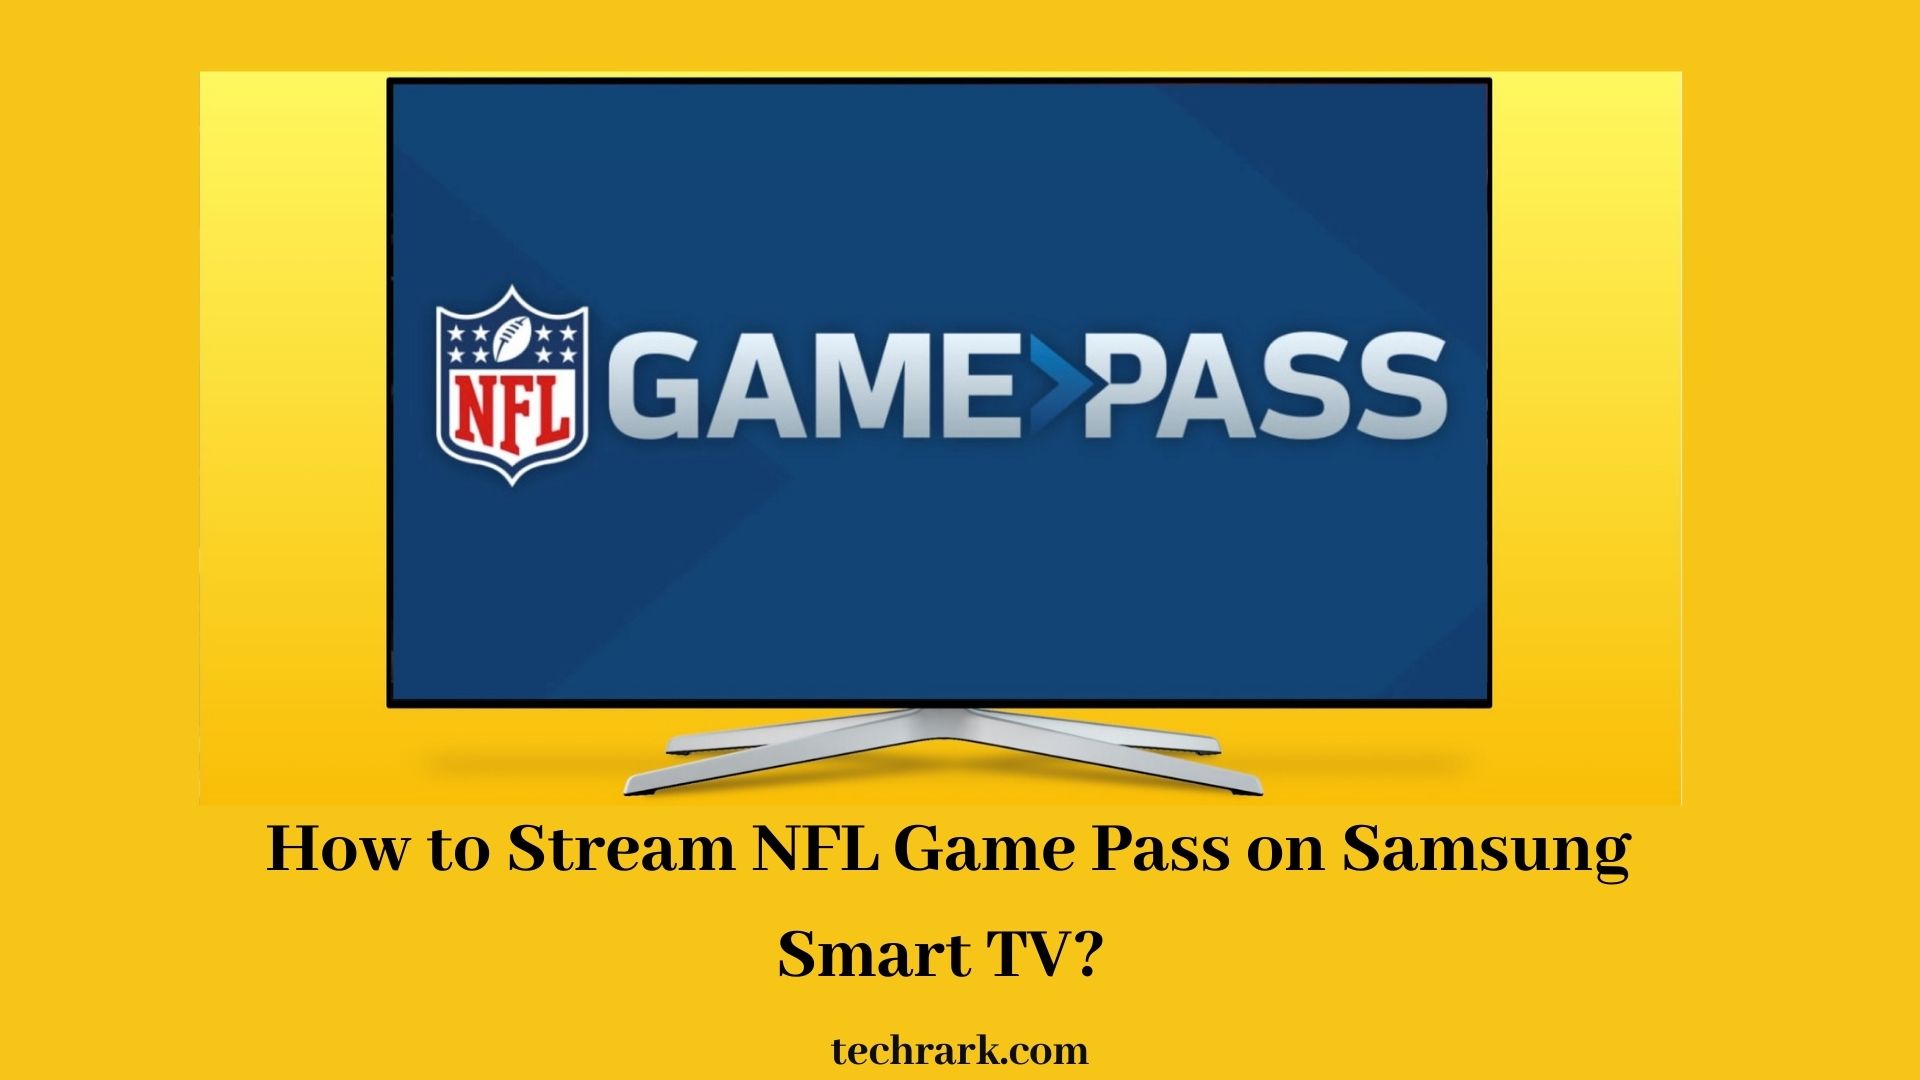 NFL Game Pass on Samsung Smart TV